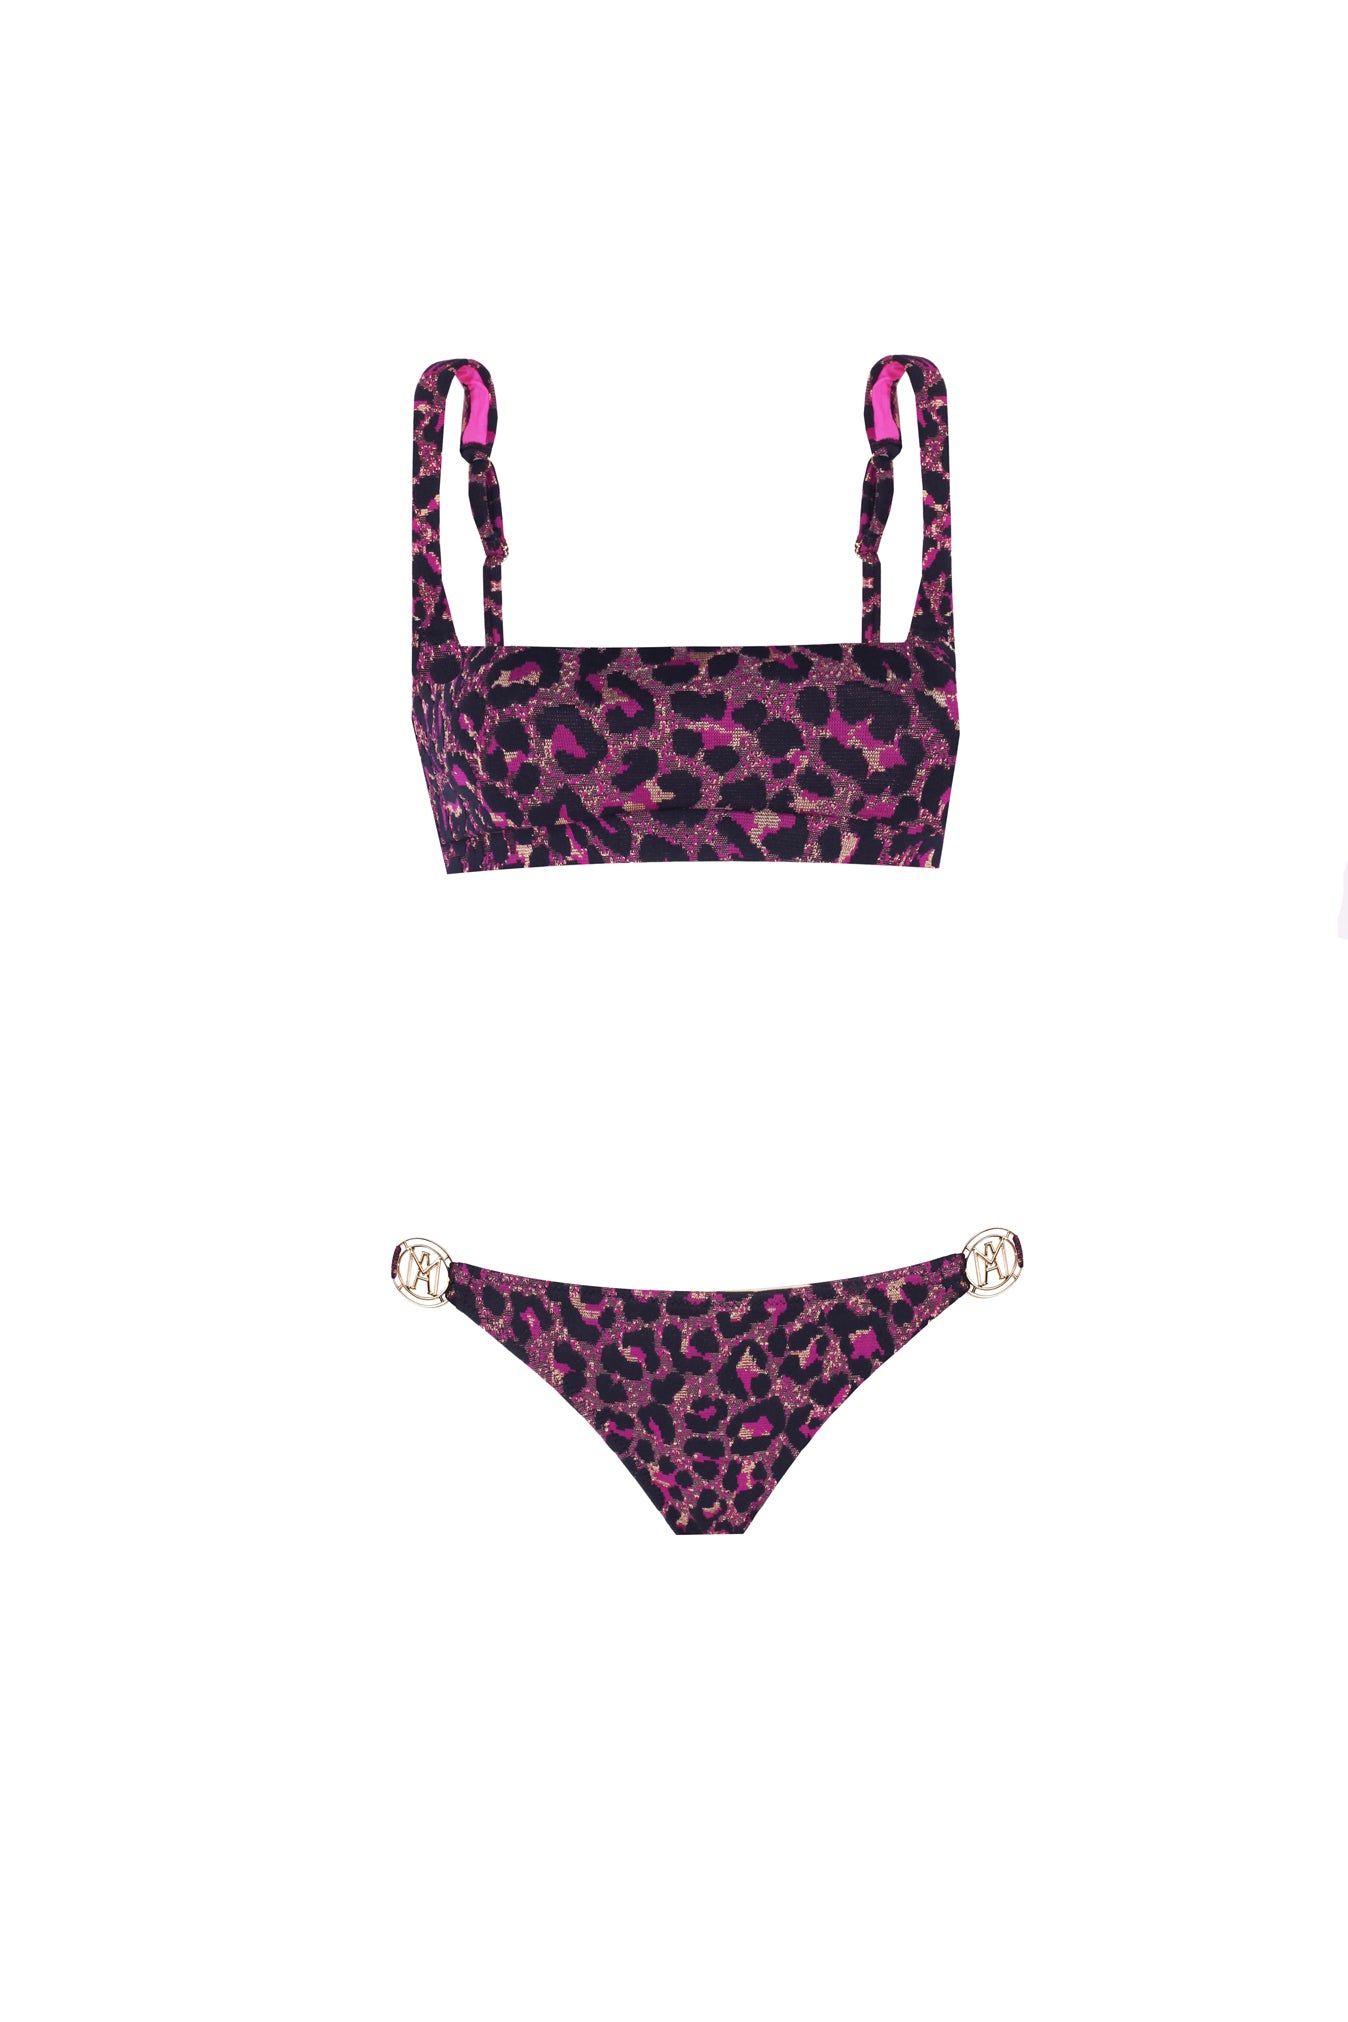 Ninette Pink Leopard Textured Bikini